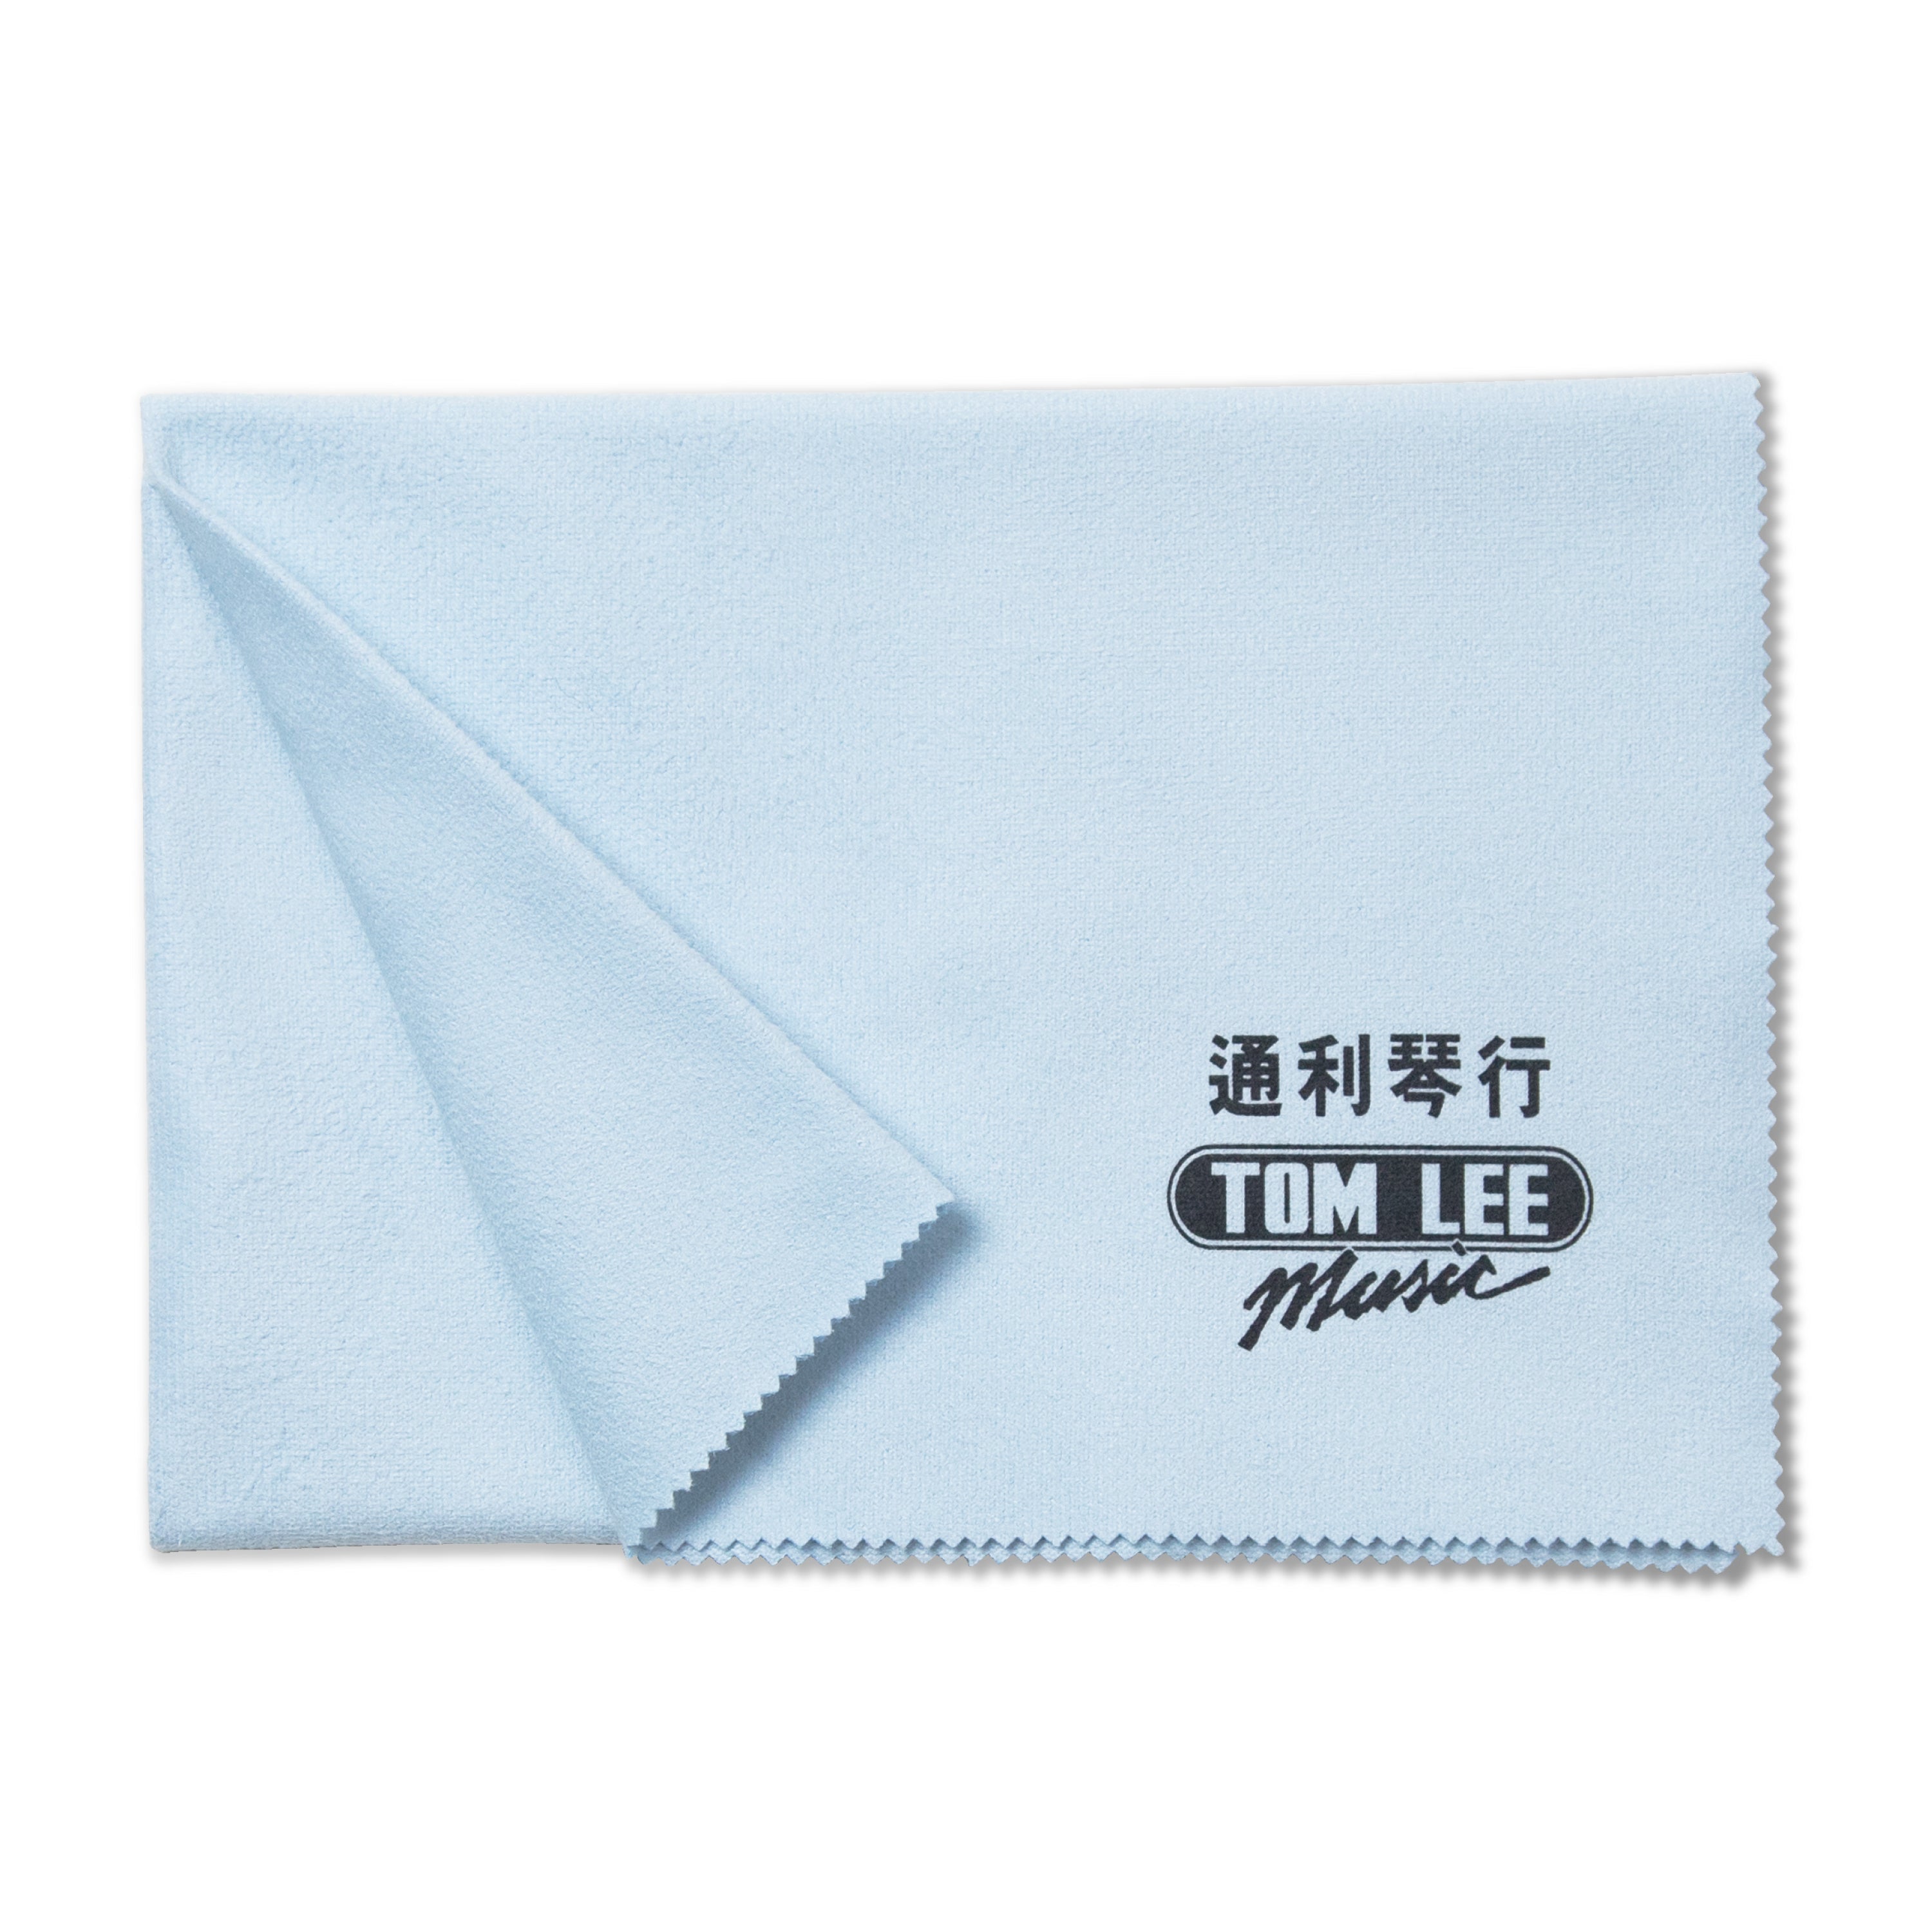 Tom Lee 高級纖維抹布